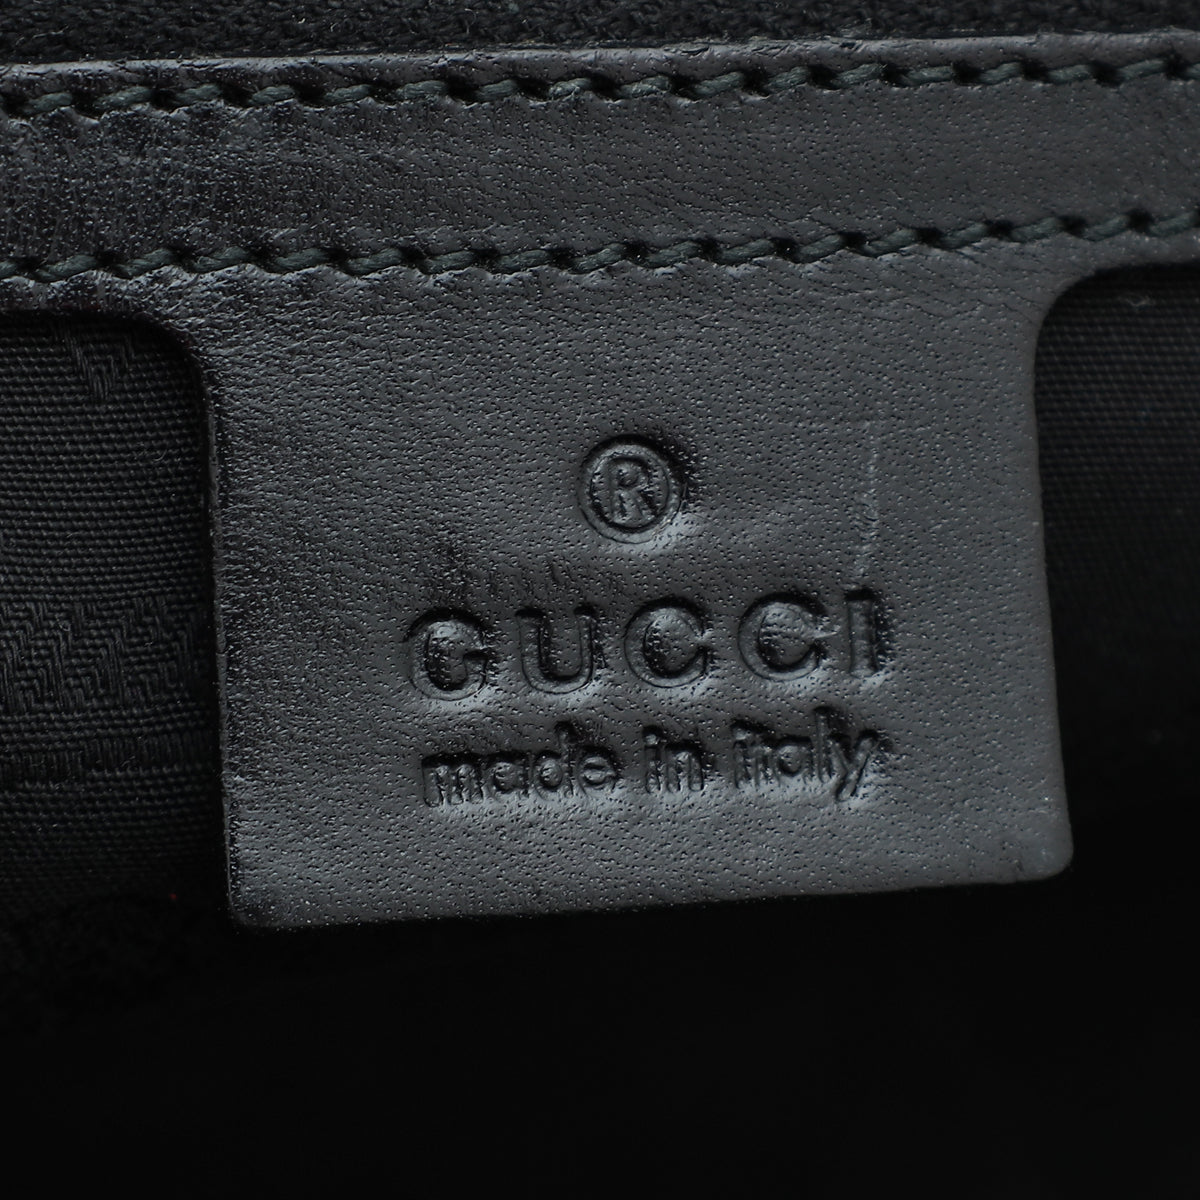 Gucci Bicolor Interlocking G Shoulder Bag